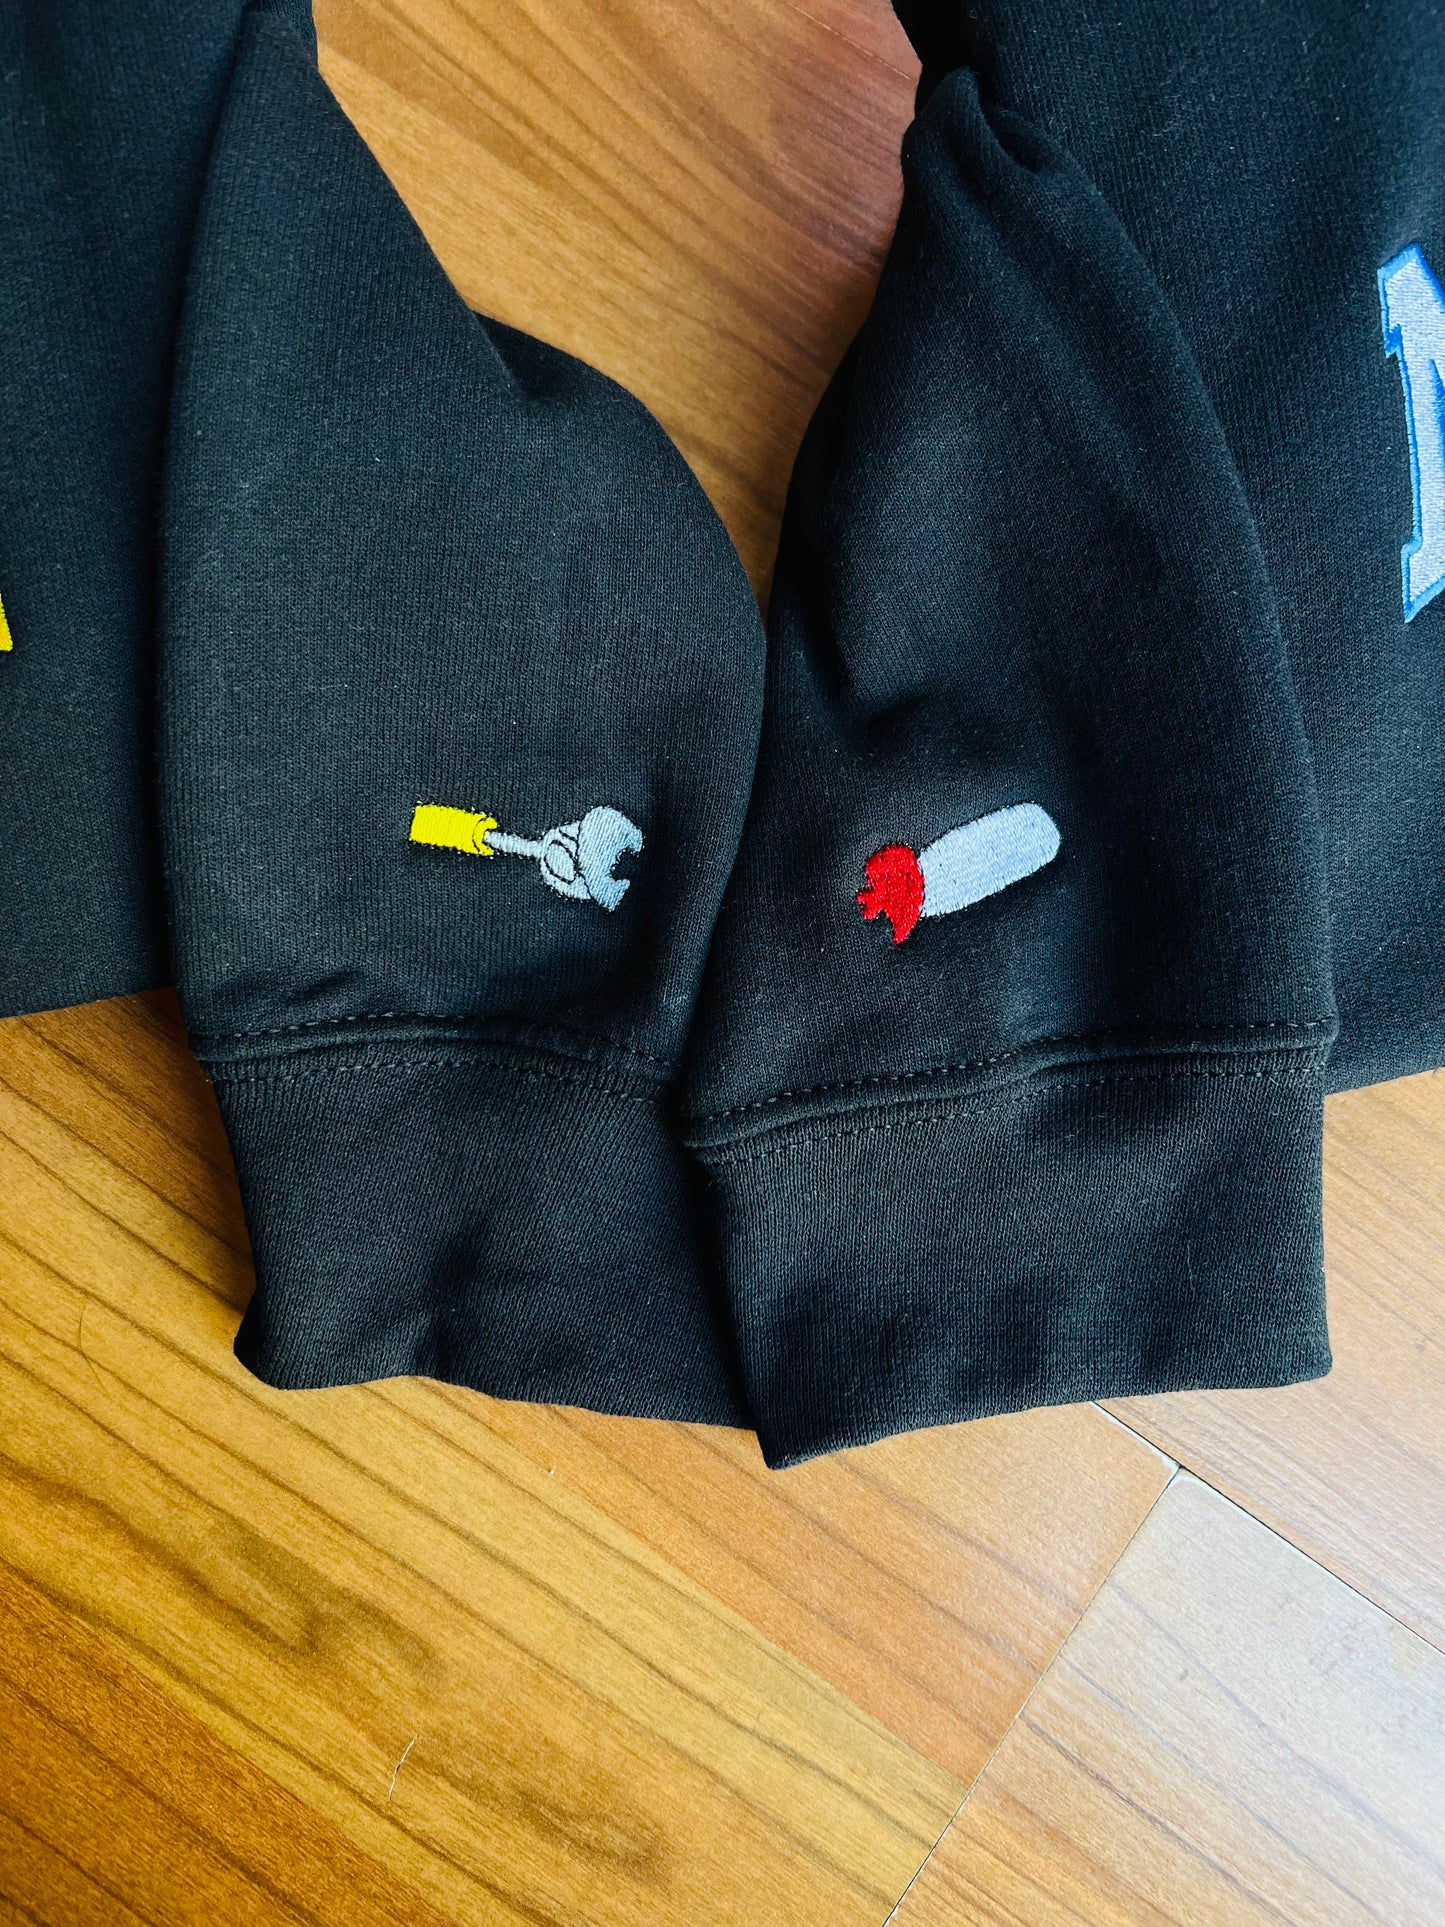 Eve & Wall-E embroidered sweatshirts